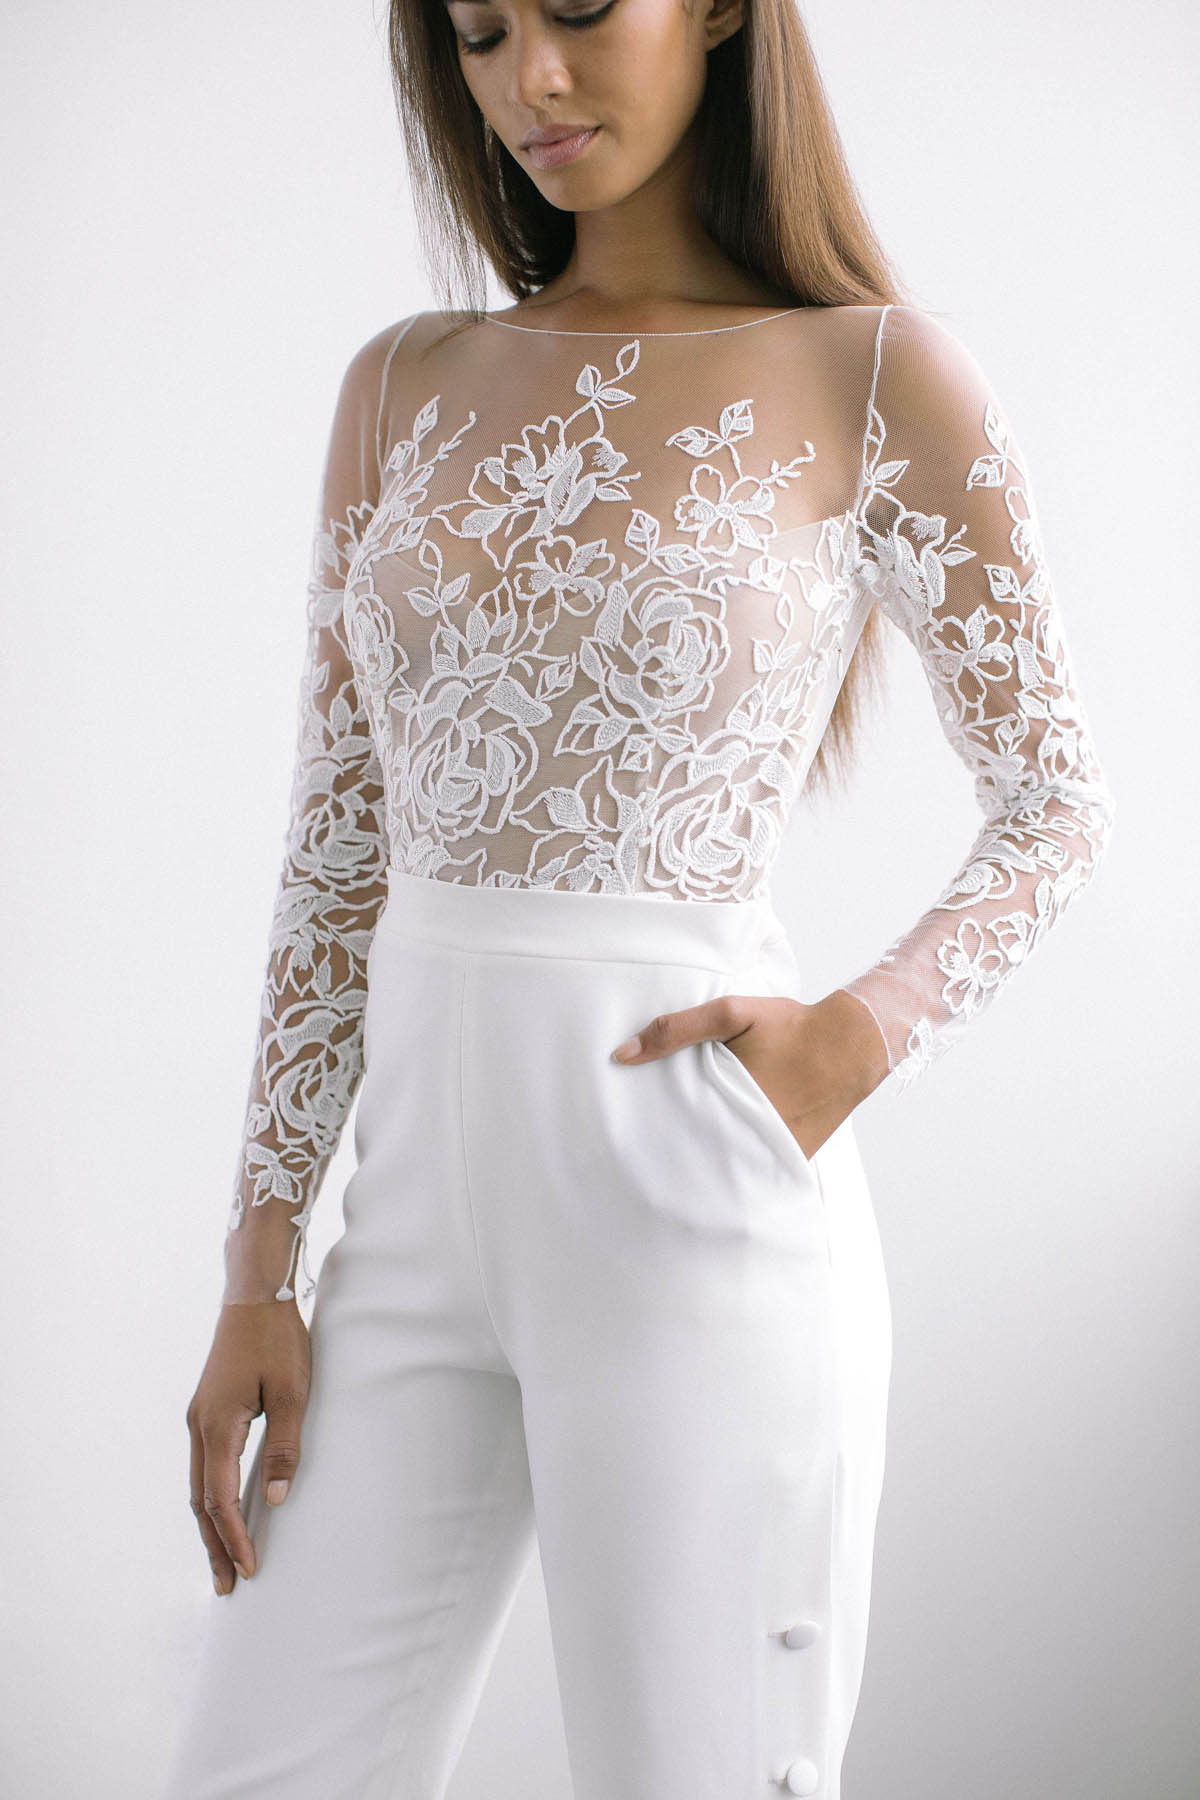 Modern Bridal Elastic Chiffon Jumpsuit Lace top Wedding dresses wps-147